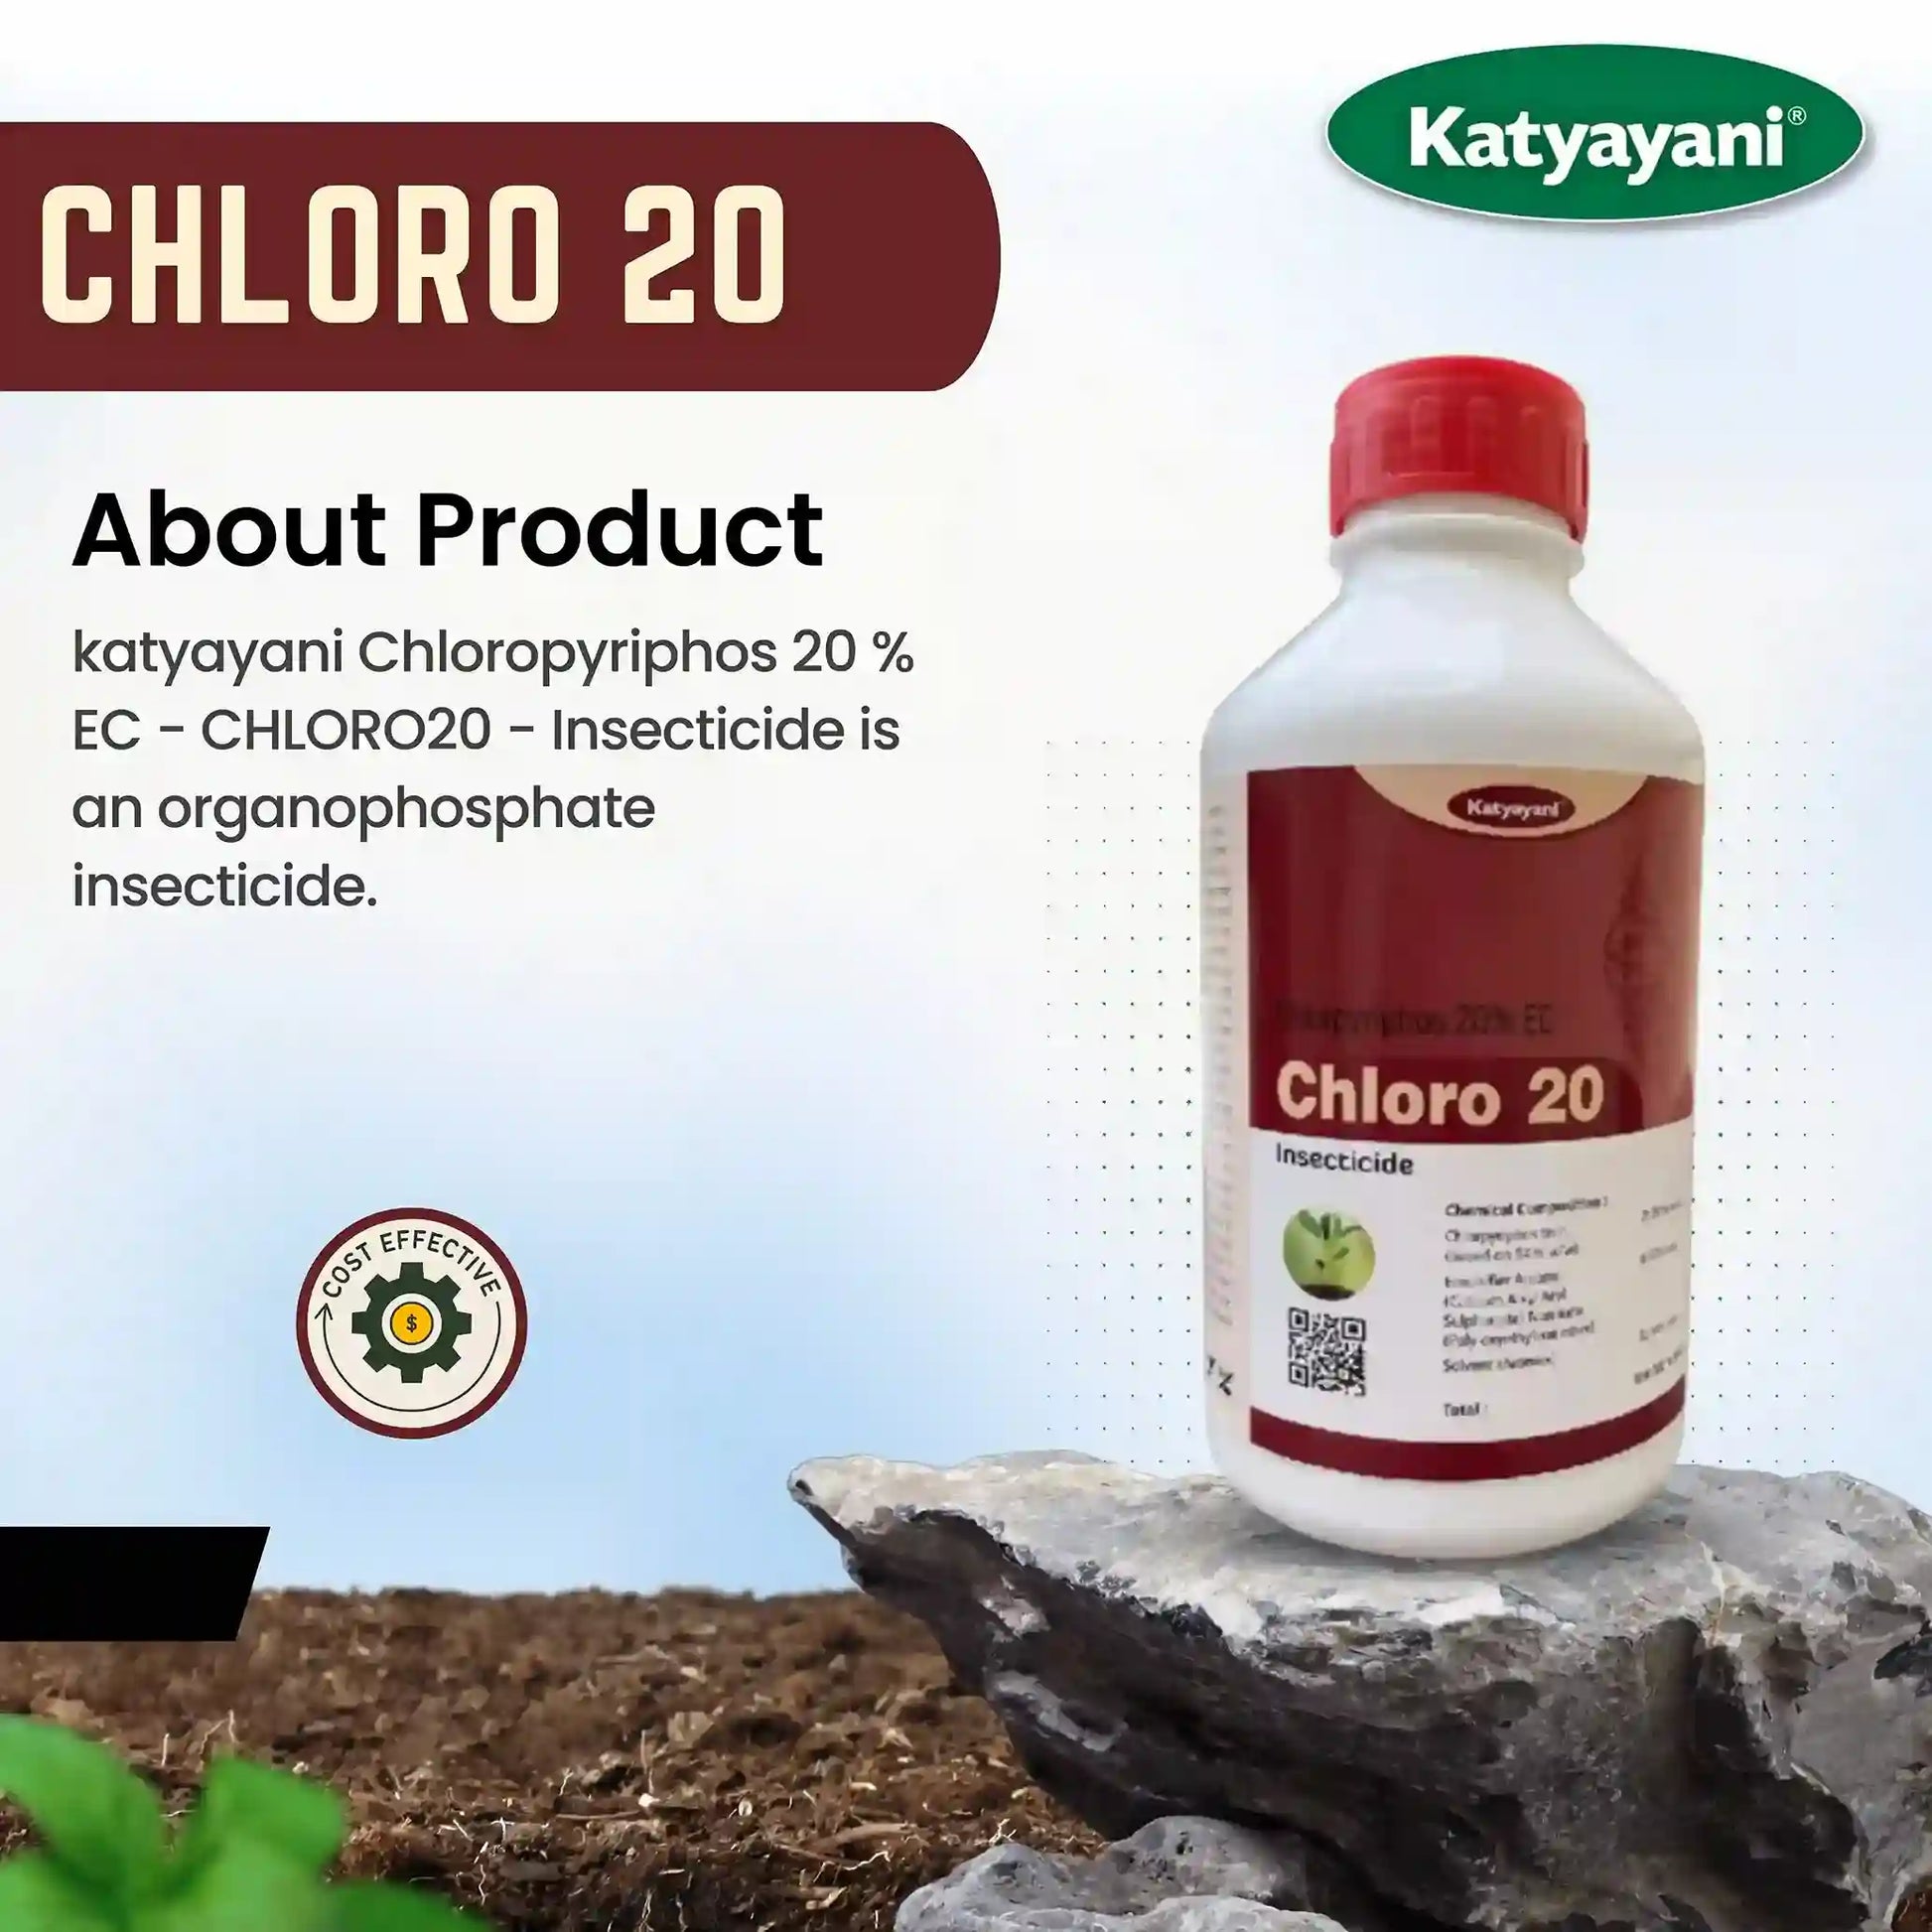 katyayani CHLORO 20 | Chloropyriphos 20 % EC | Insecticide about